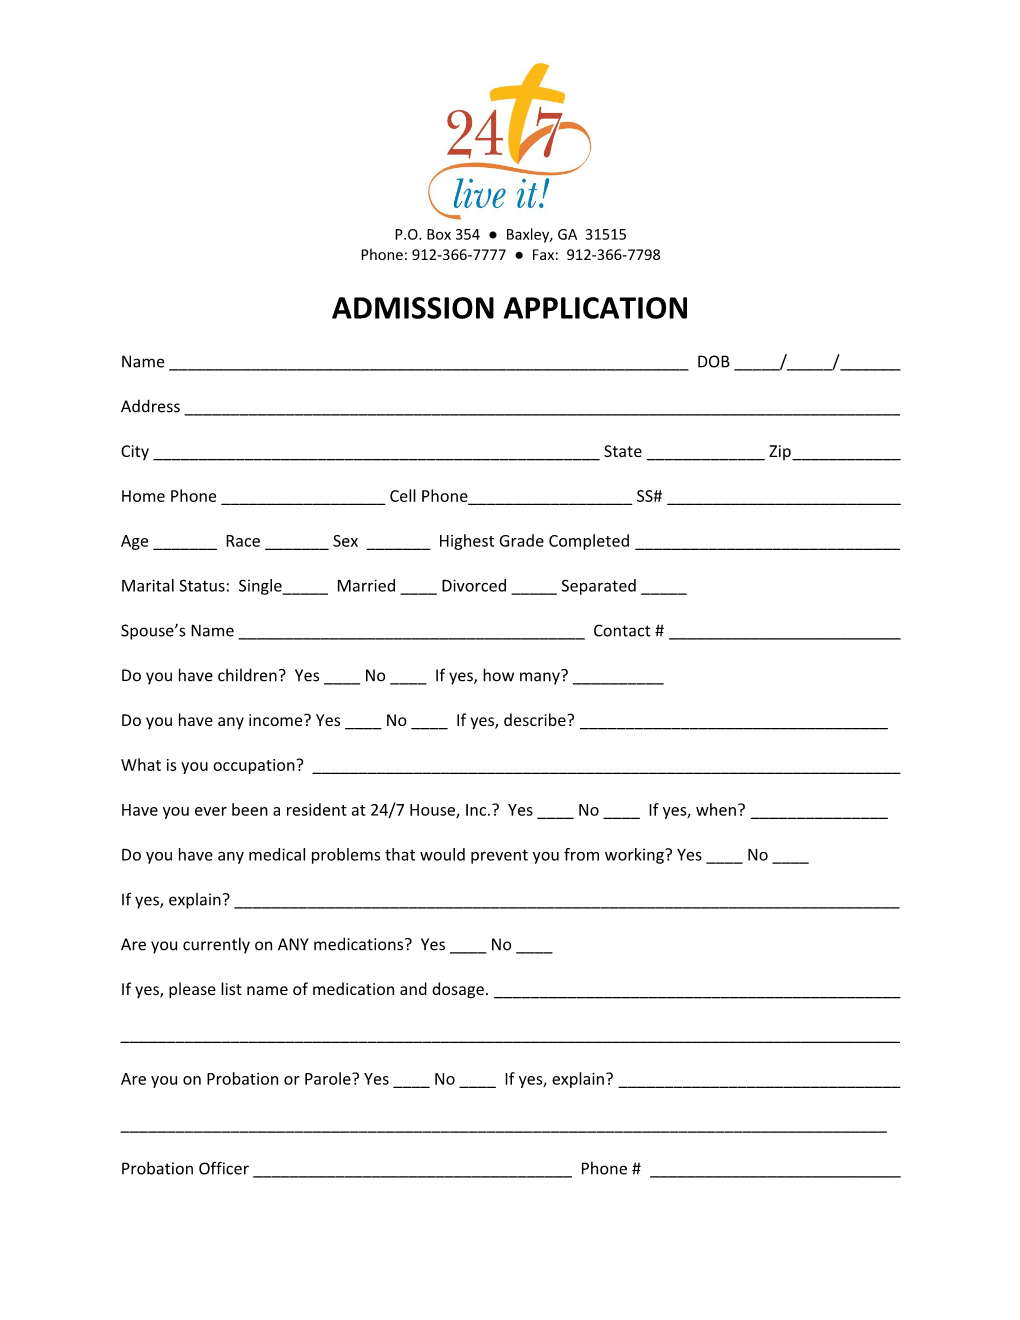 Admission Application